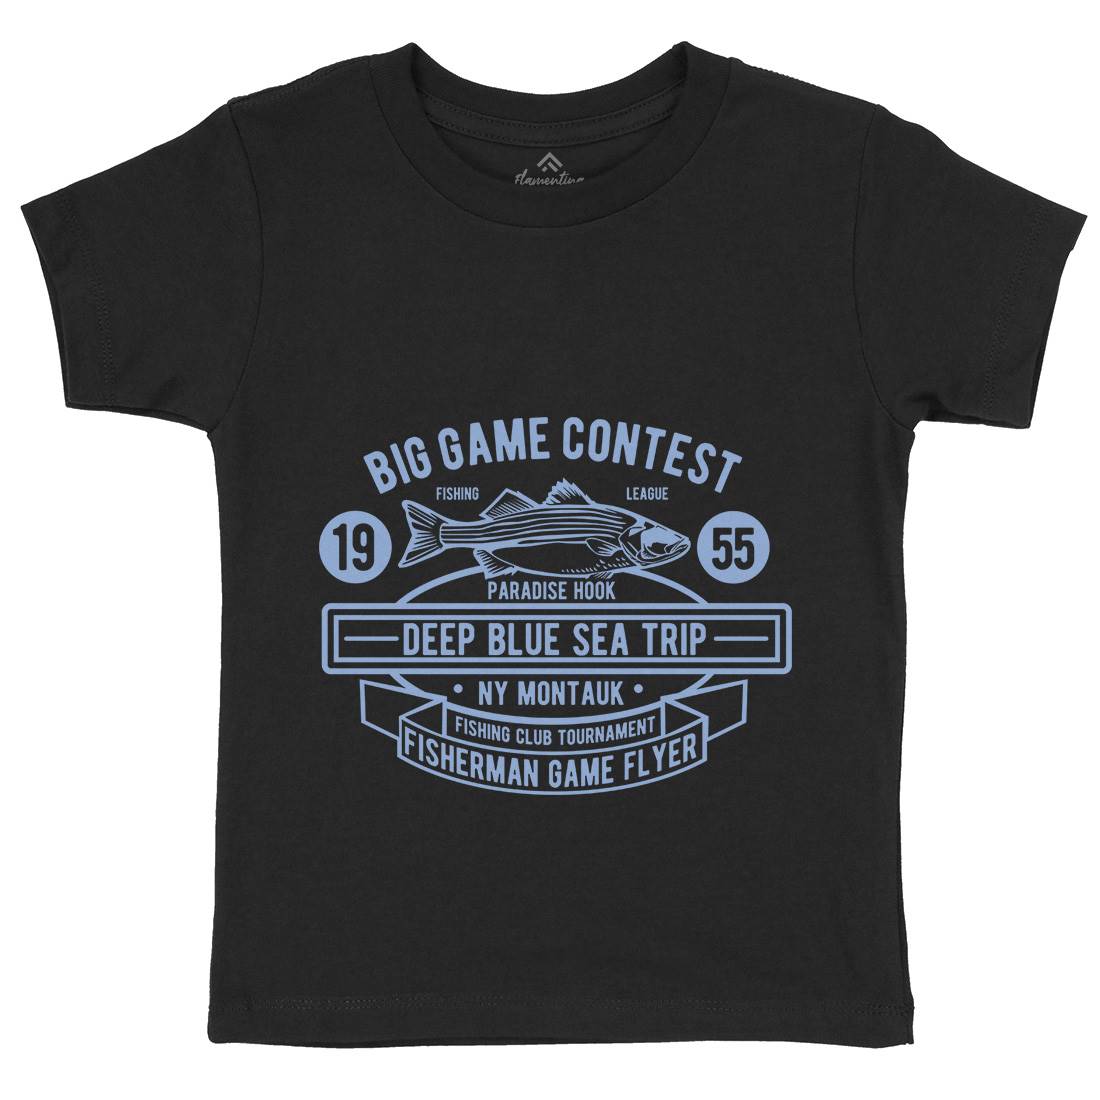 Big Game Contest Kids Crew Neck T-Shirt Fishing B380